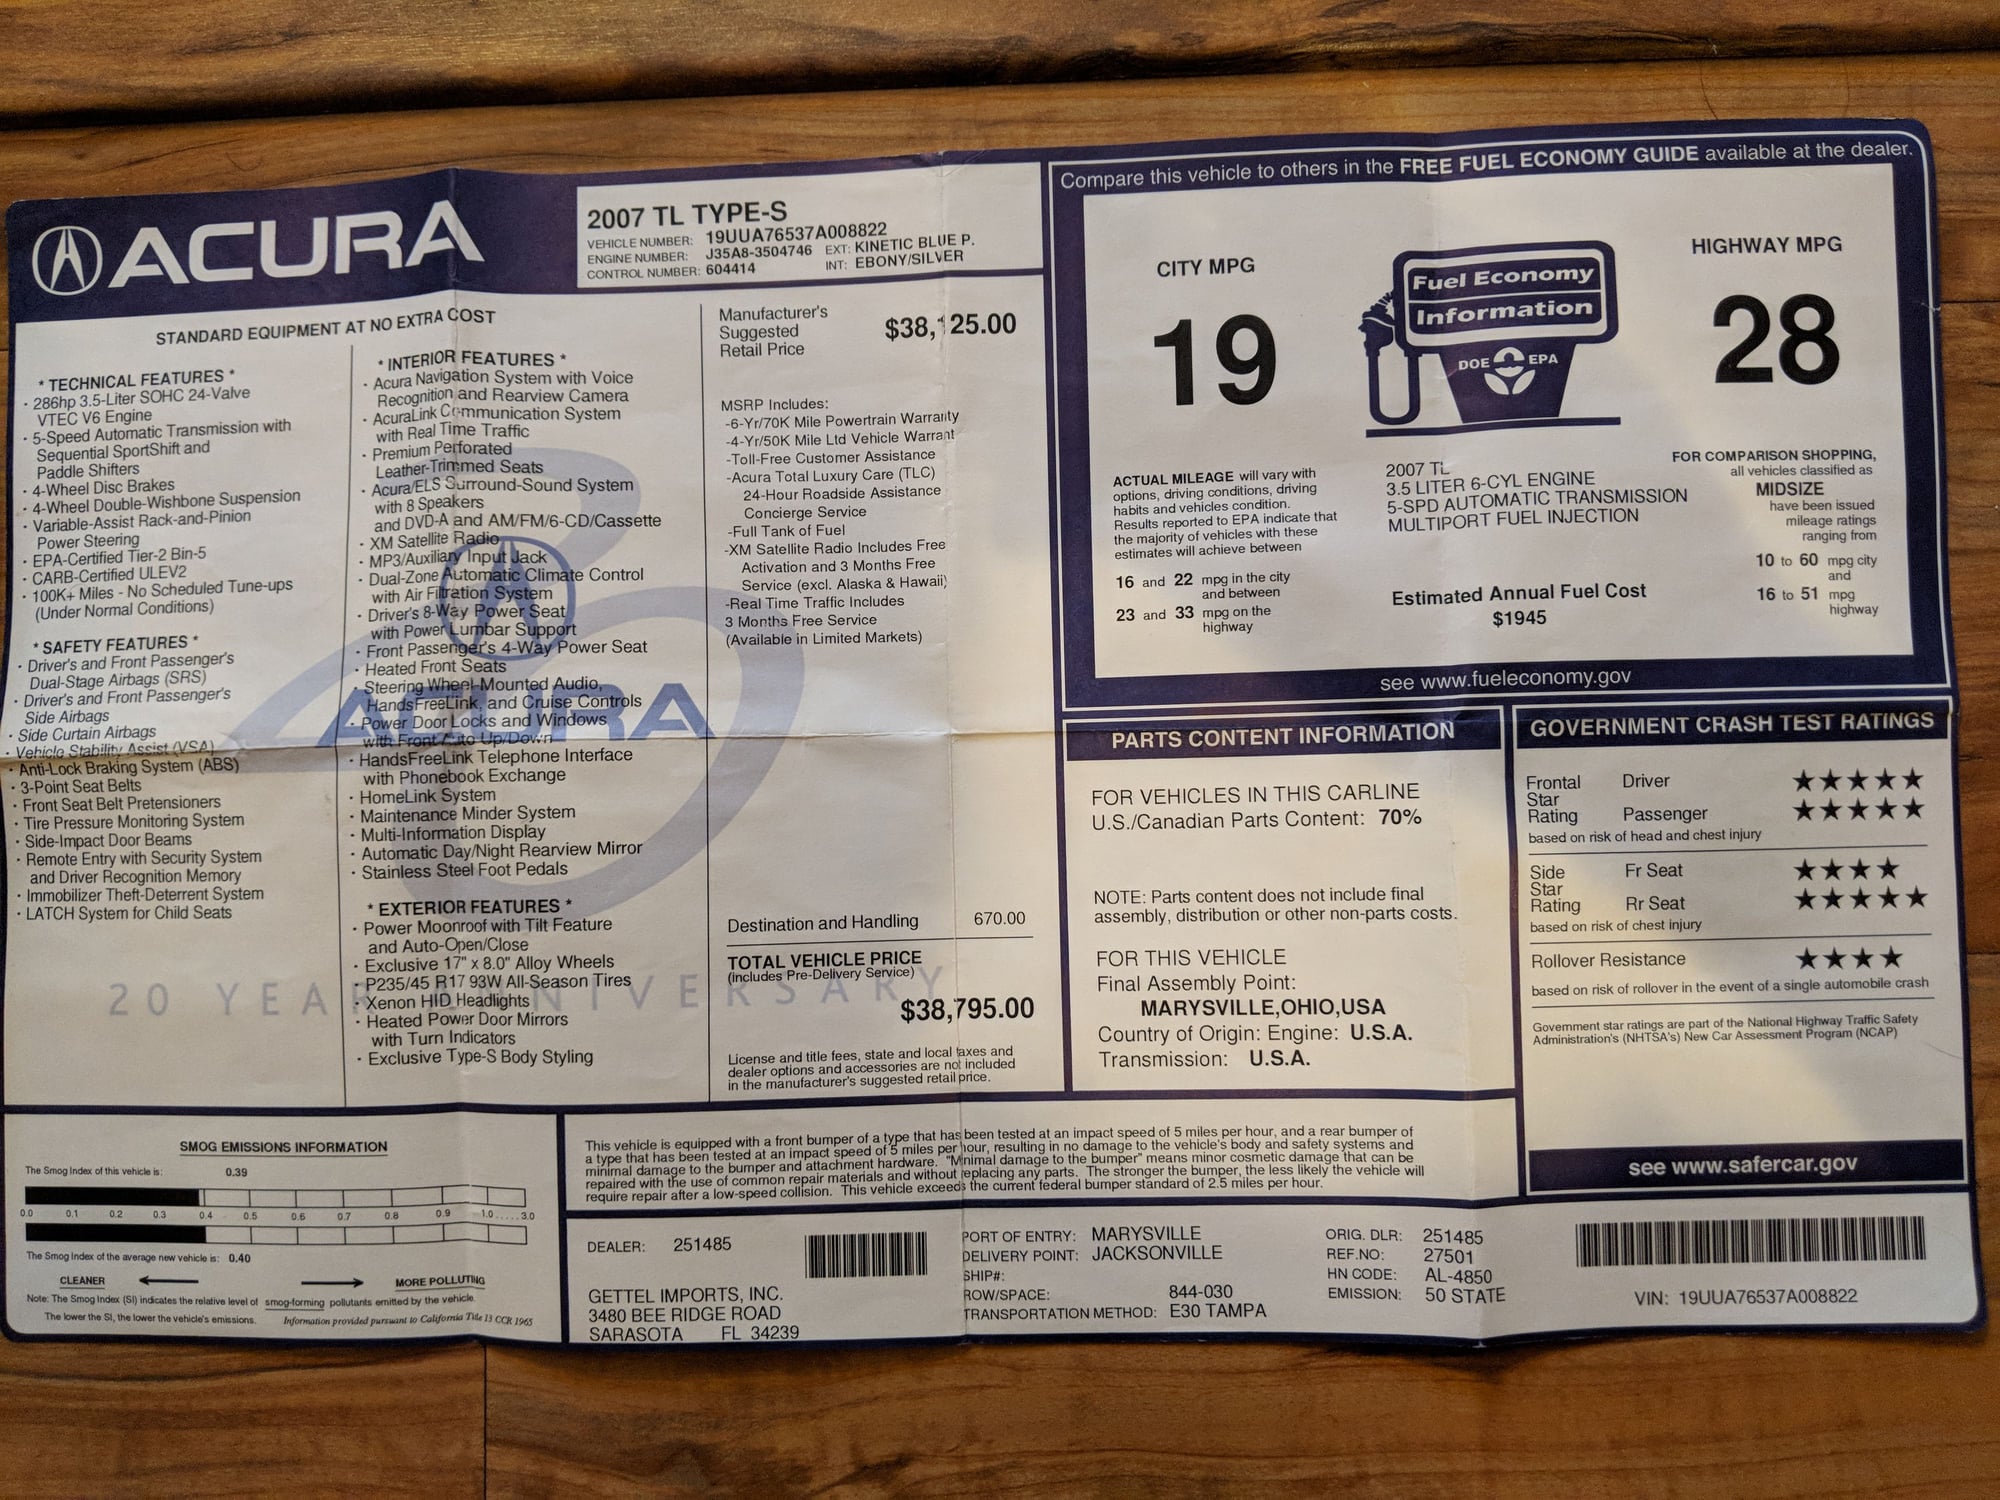 2007 Acura TL - SOLD: 07 Acura TL Type S - Kinetic Blue Pearl - Used - VIN 19UUA76537A008822 - 130,100 Miles - 6 cyl - 2WD - Automatic - Sedan - Blue - San Diego, CA 92128, United States